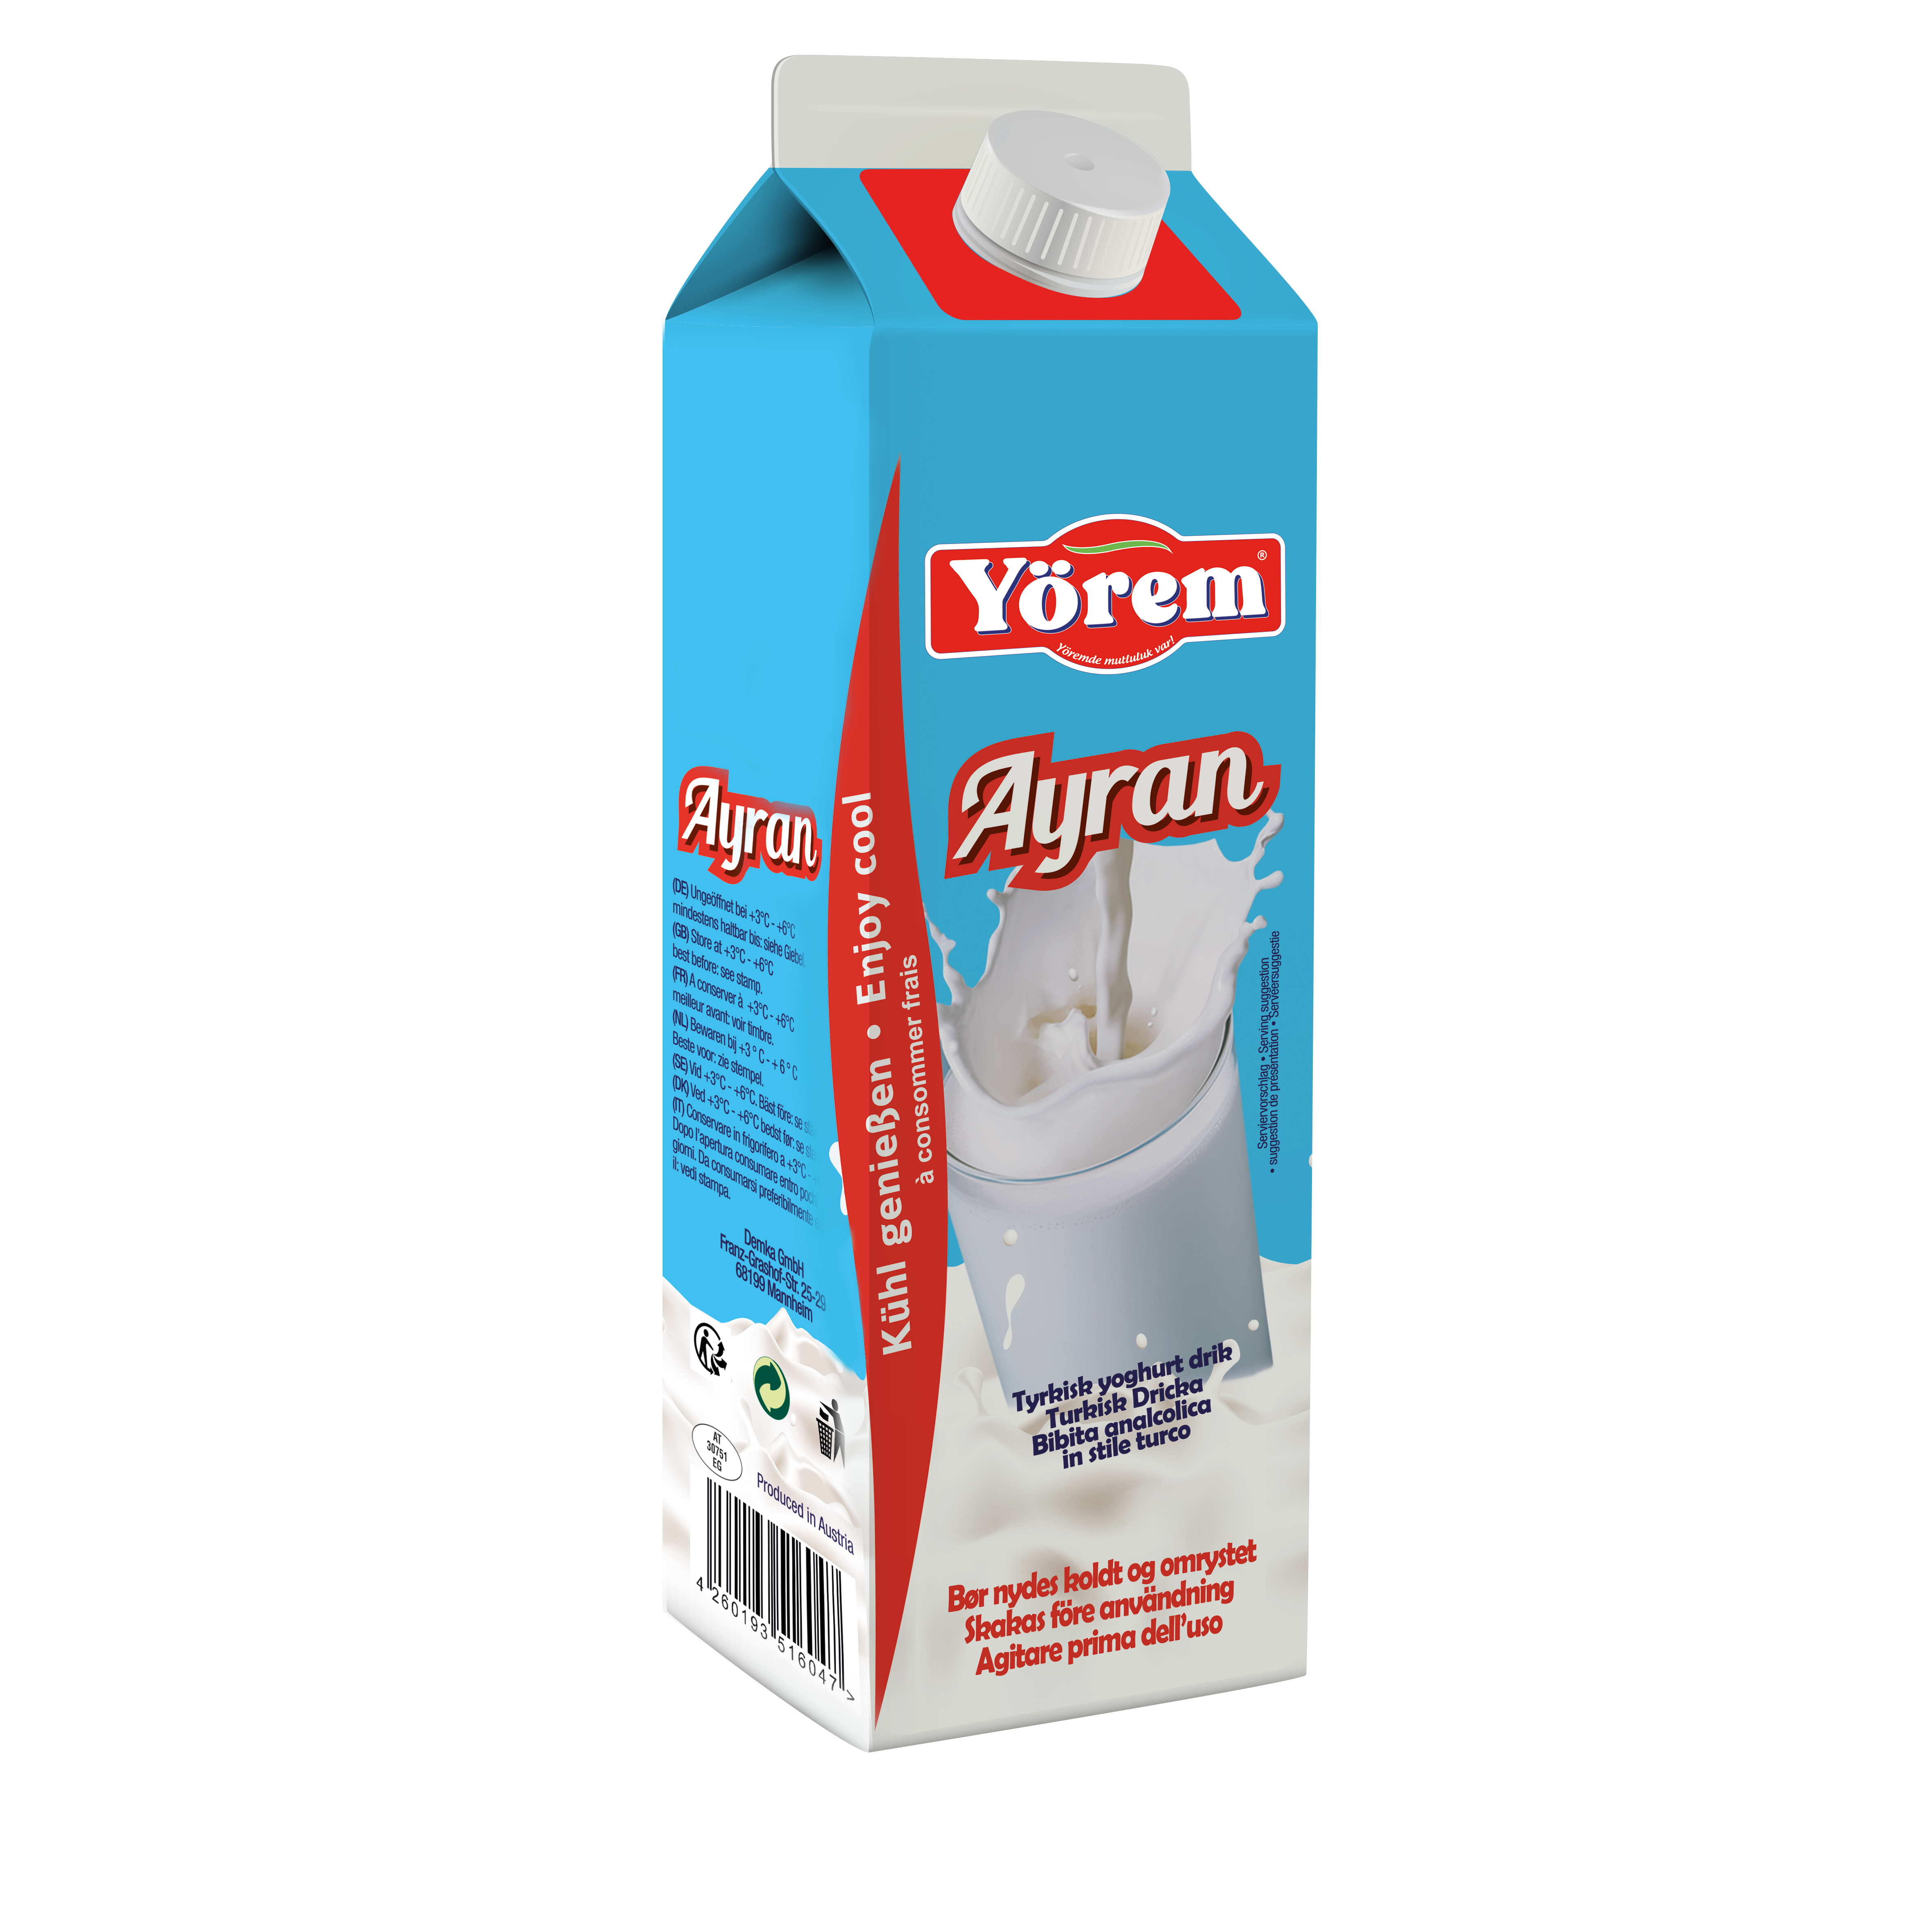 YOREM AYRAN 1 LT TETRA PACK PROMO (boisson turque au yaourt)